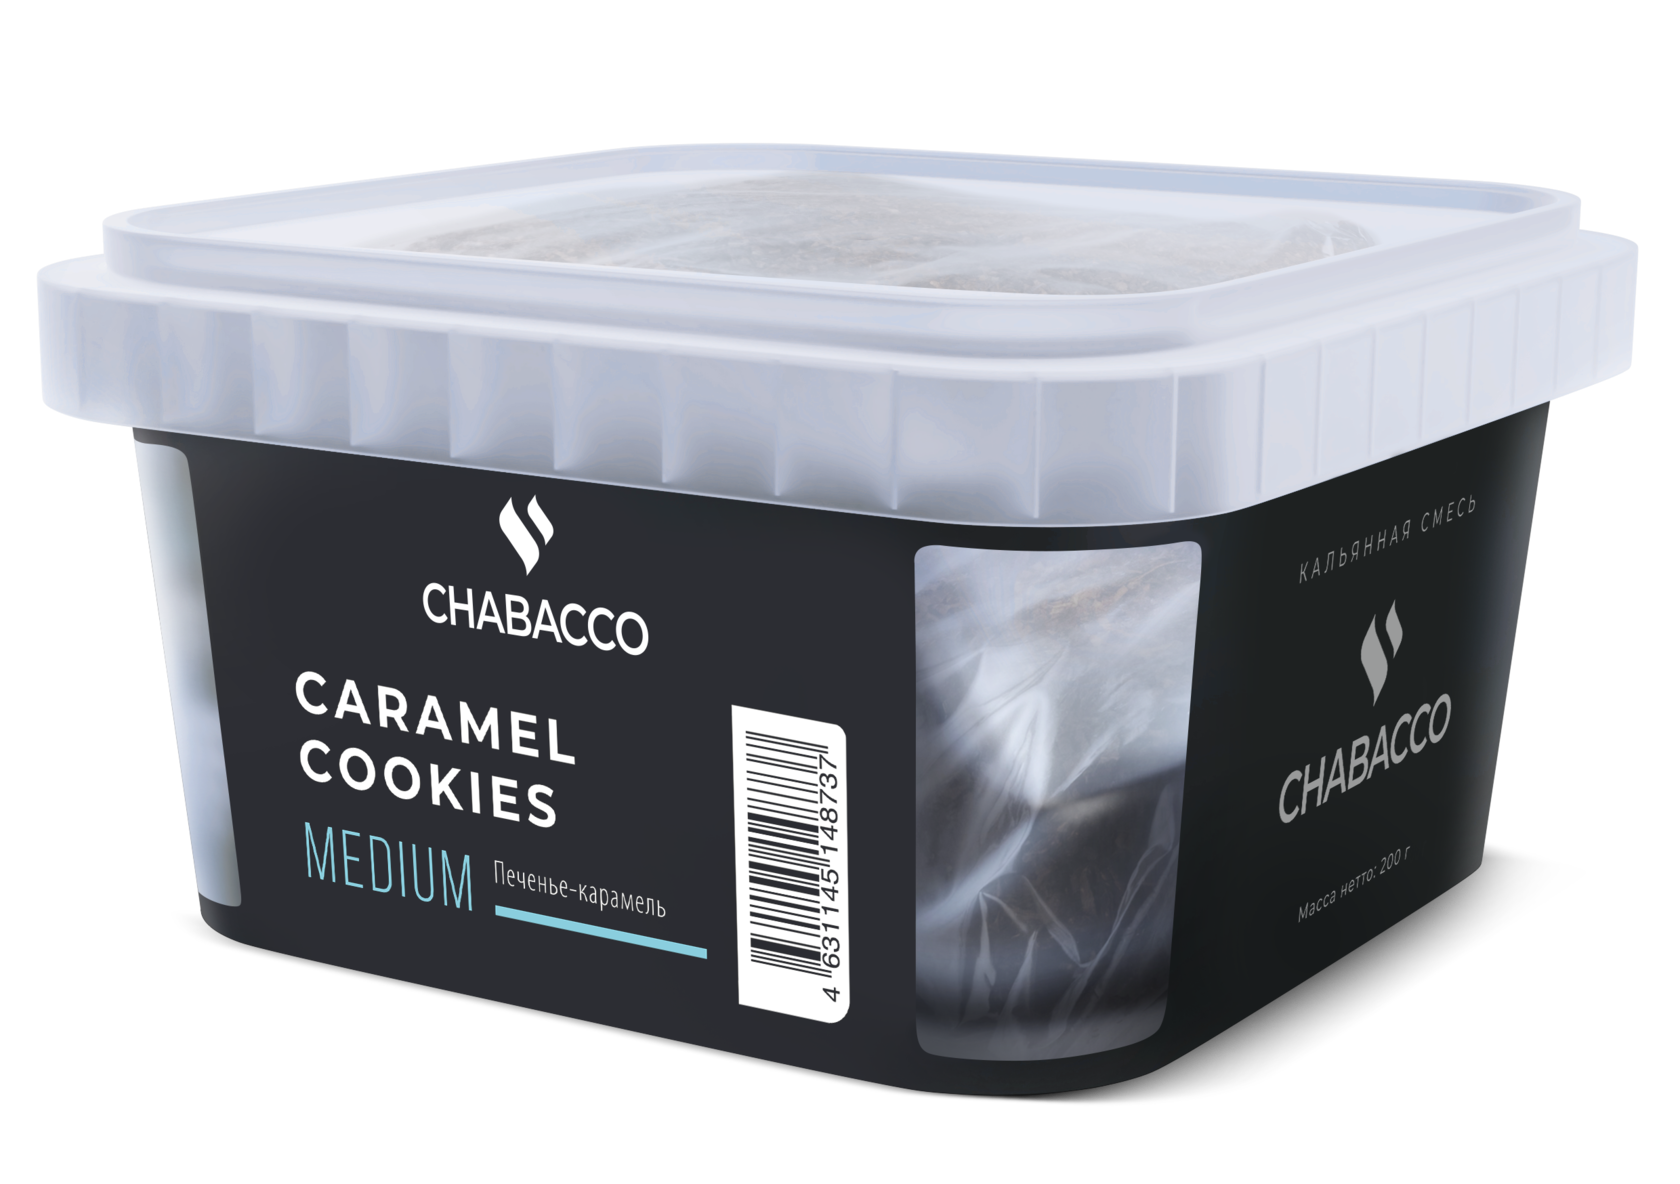 Chabacco - Medium - CARAMEL COOKIES - 200 g